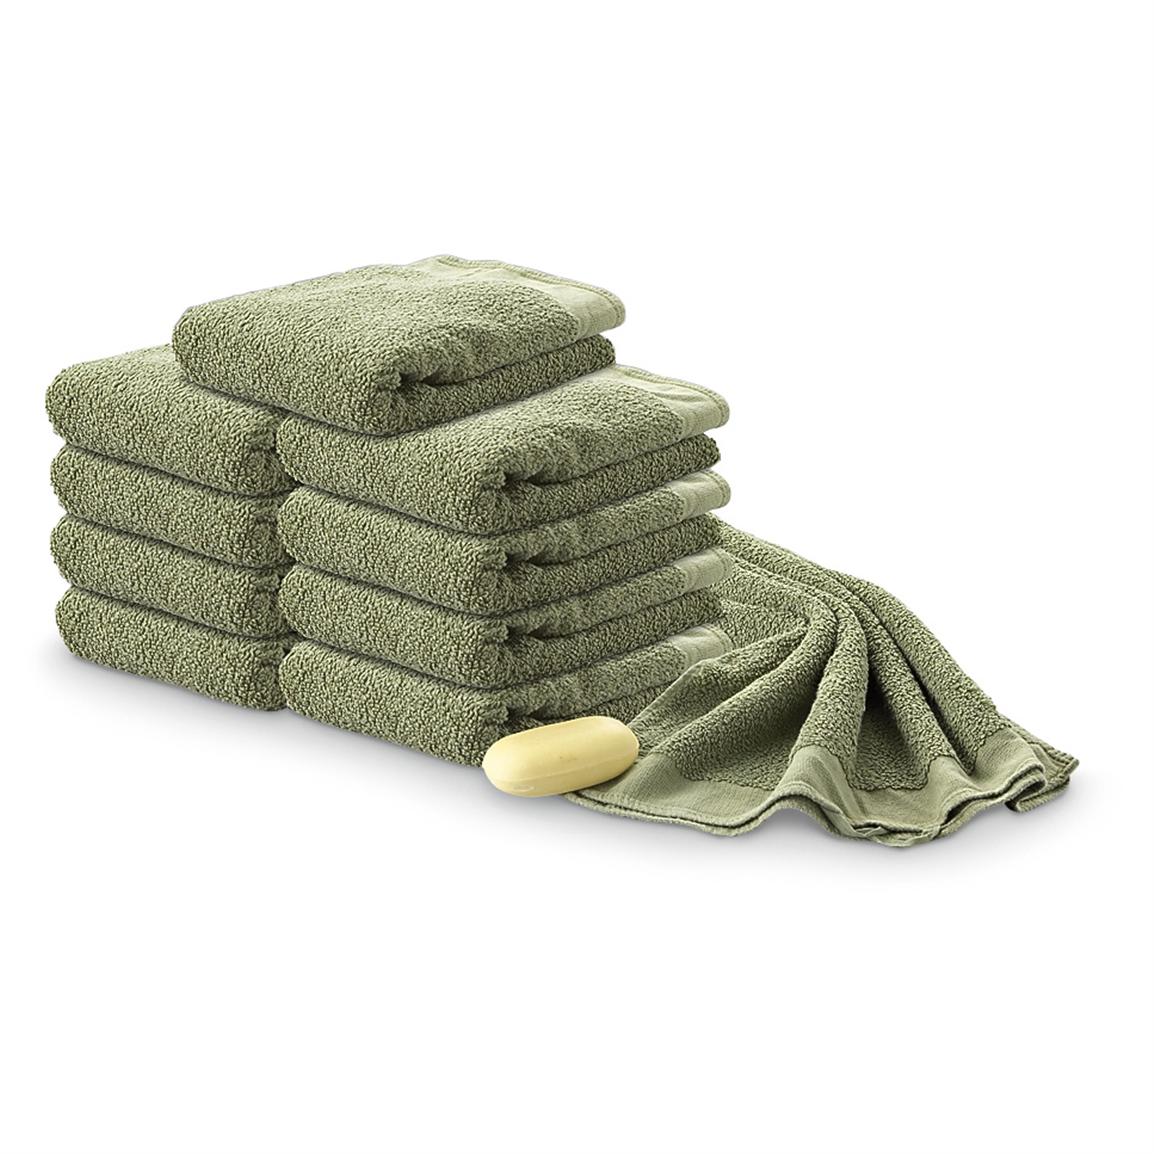 10 Used British Military Surplus Cotton Towels, Olive Drab